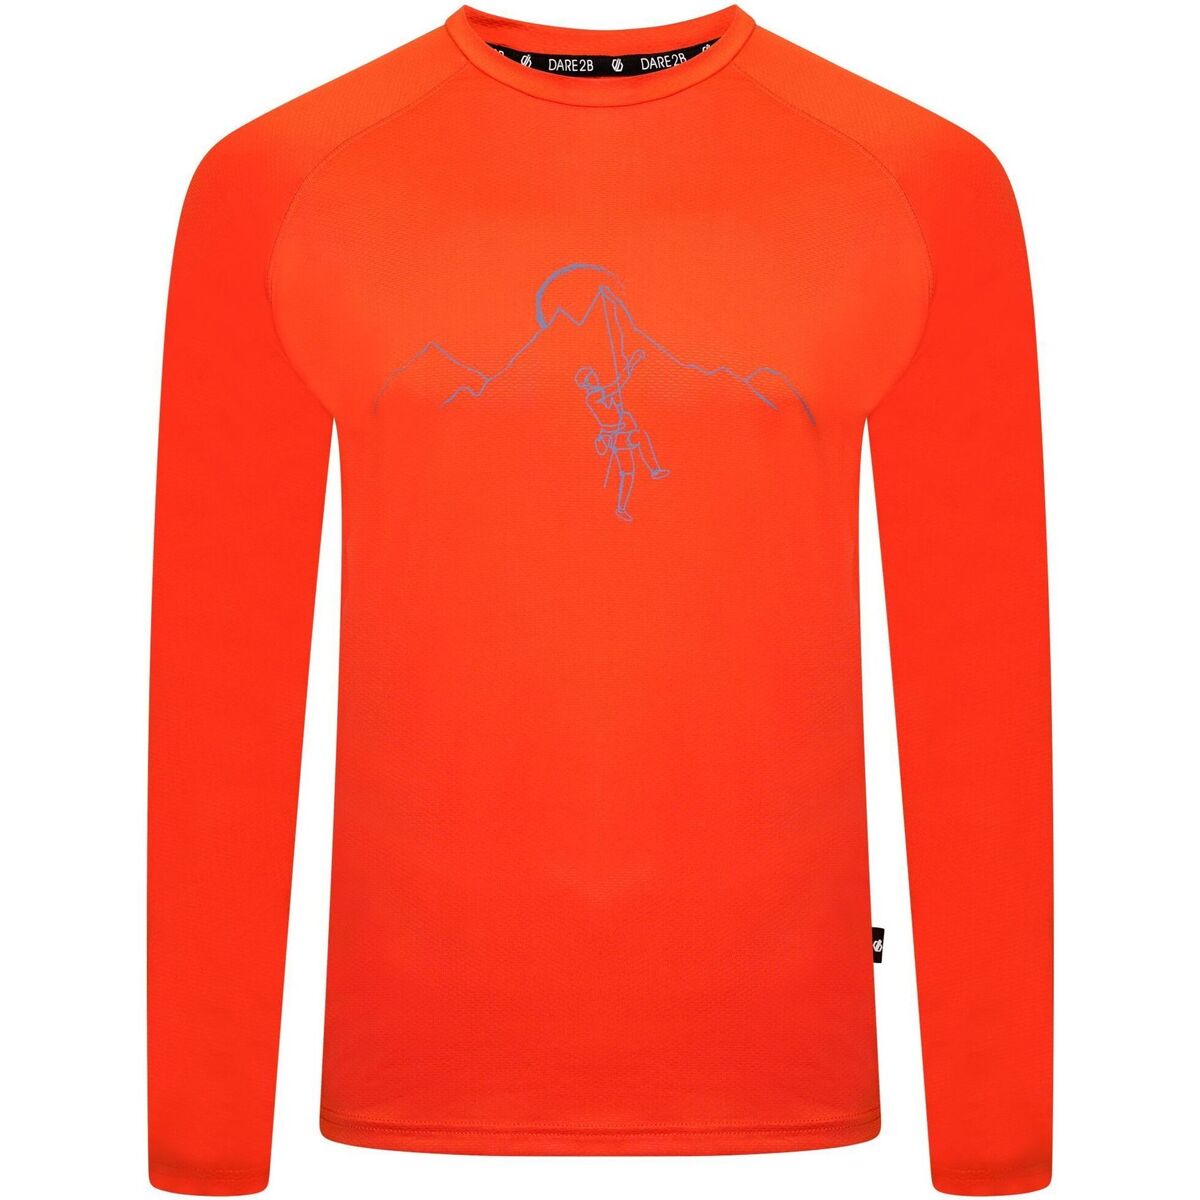 Vêtements Homme T-shirts manches longues Dare 2b Righteous II Orange